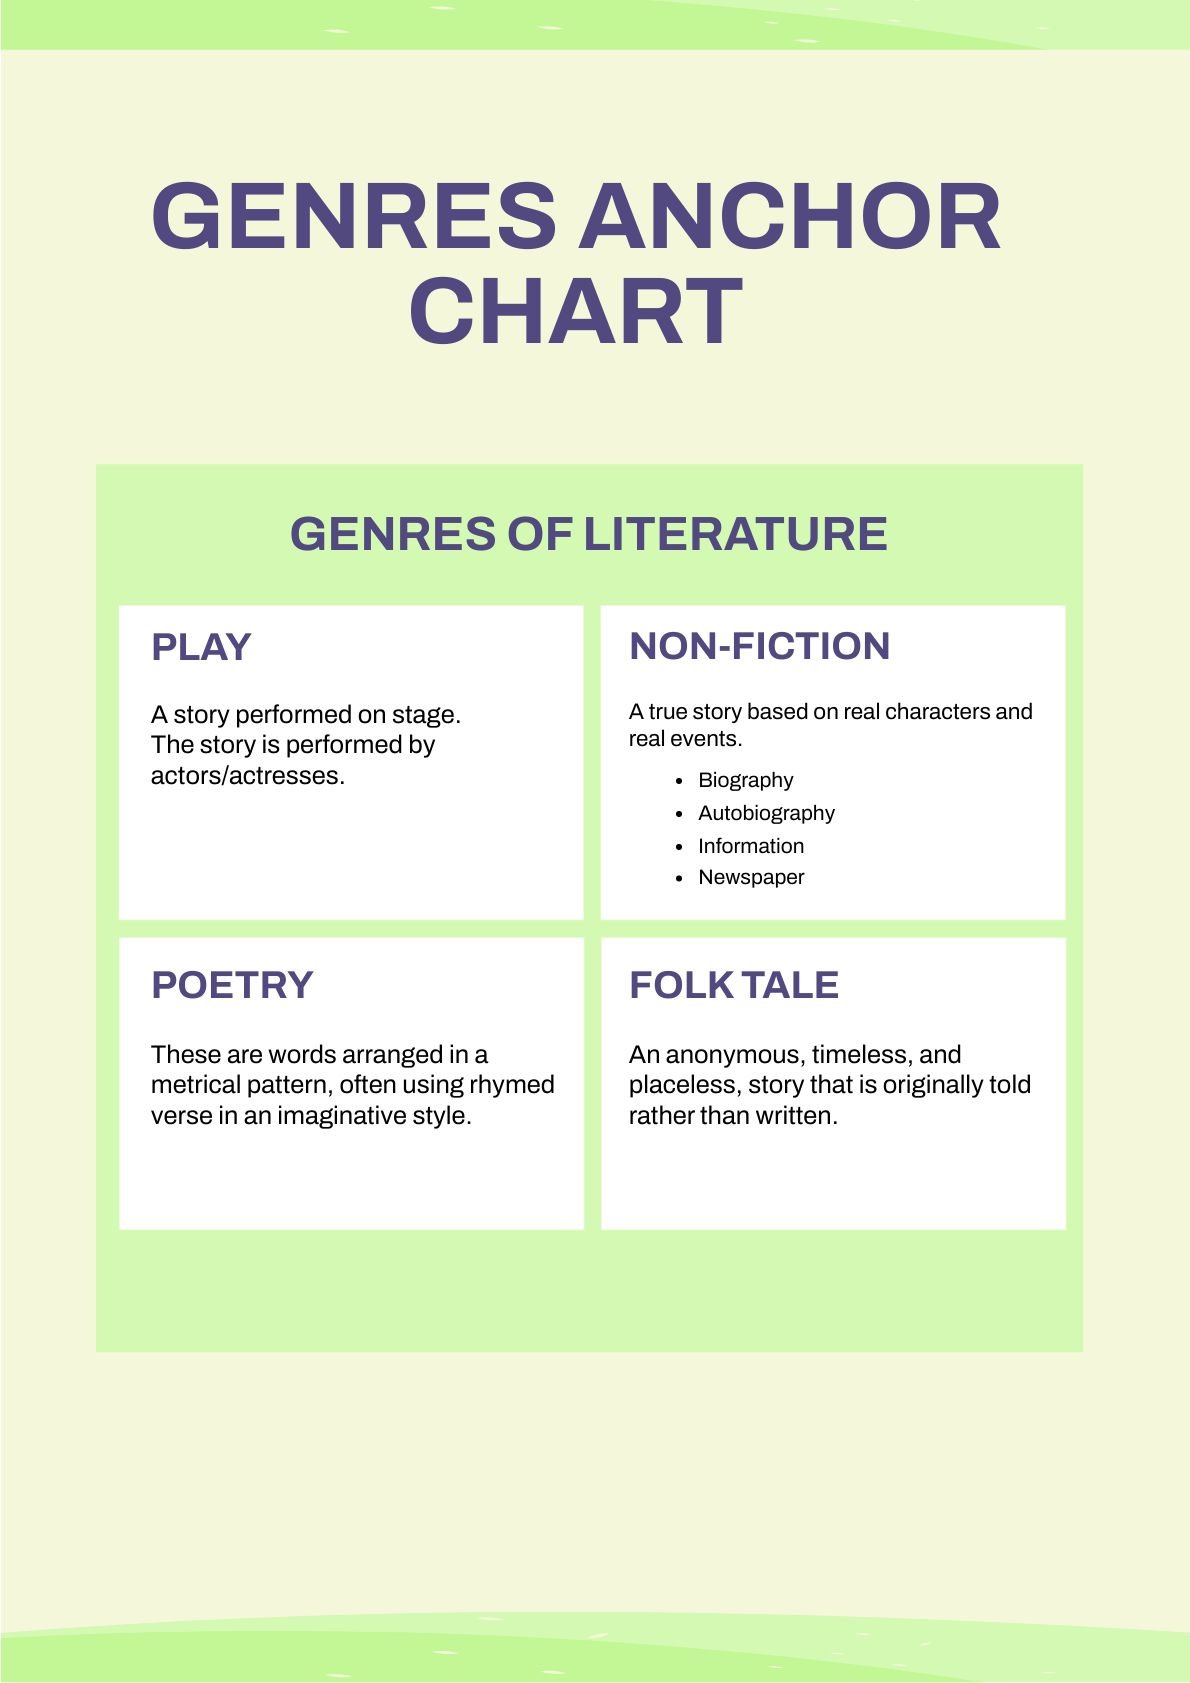 Genres Anchor Chart in PDF, Illustrator